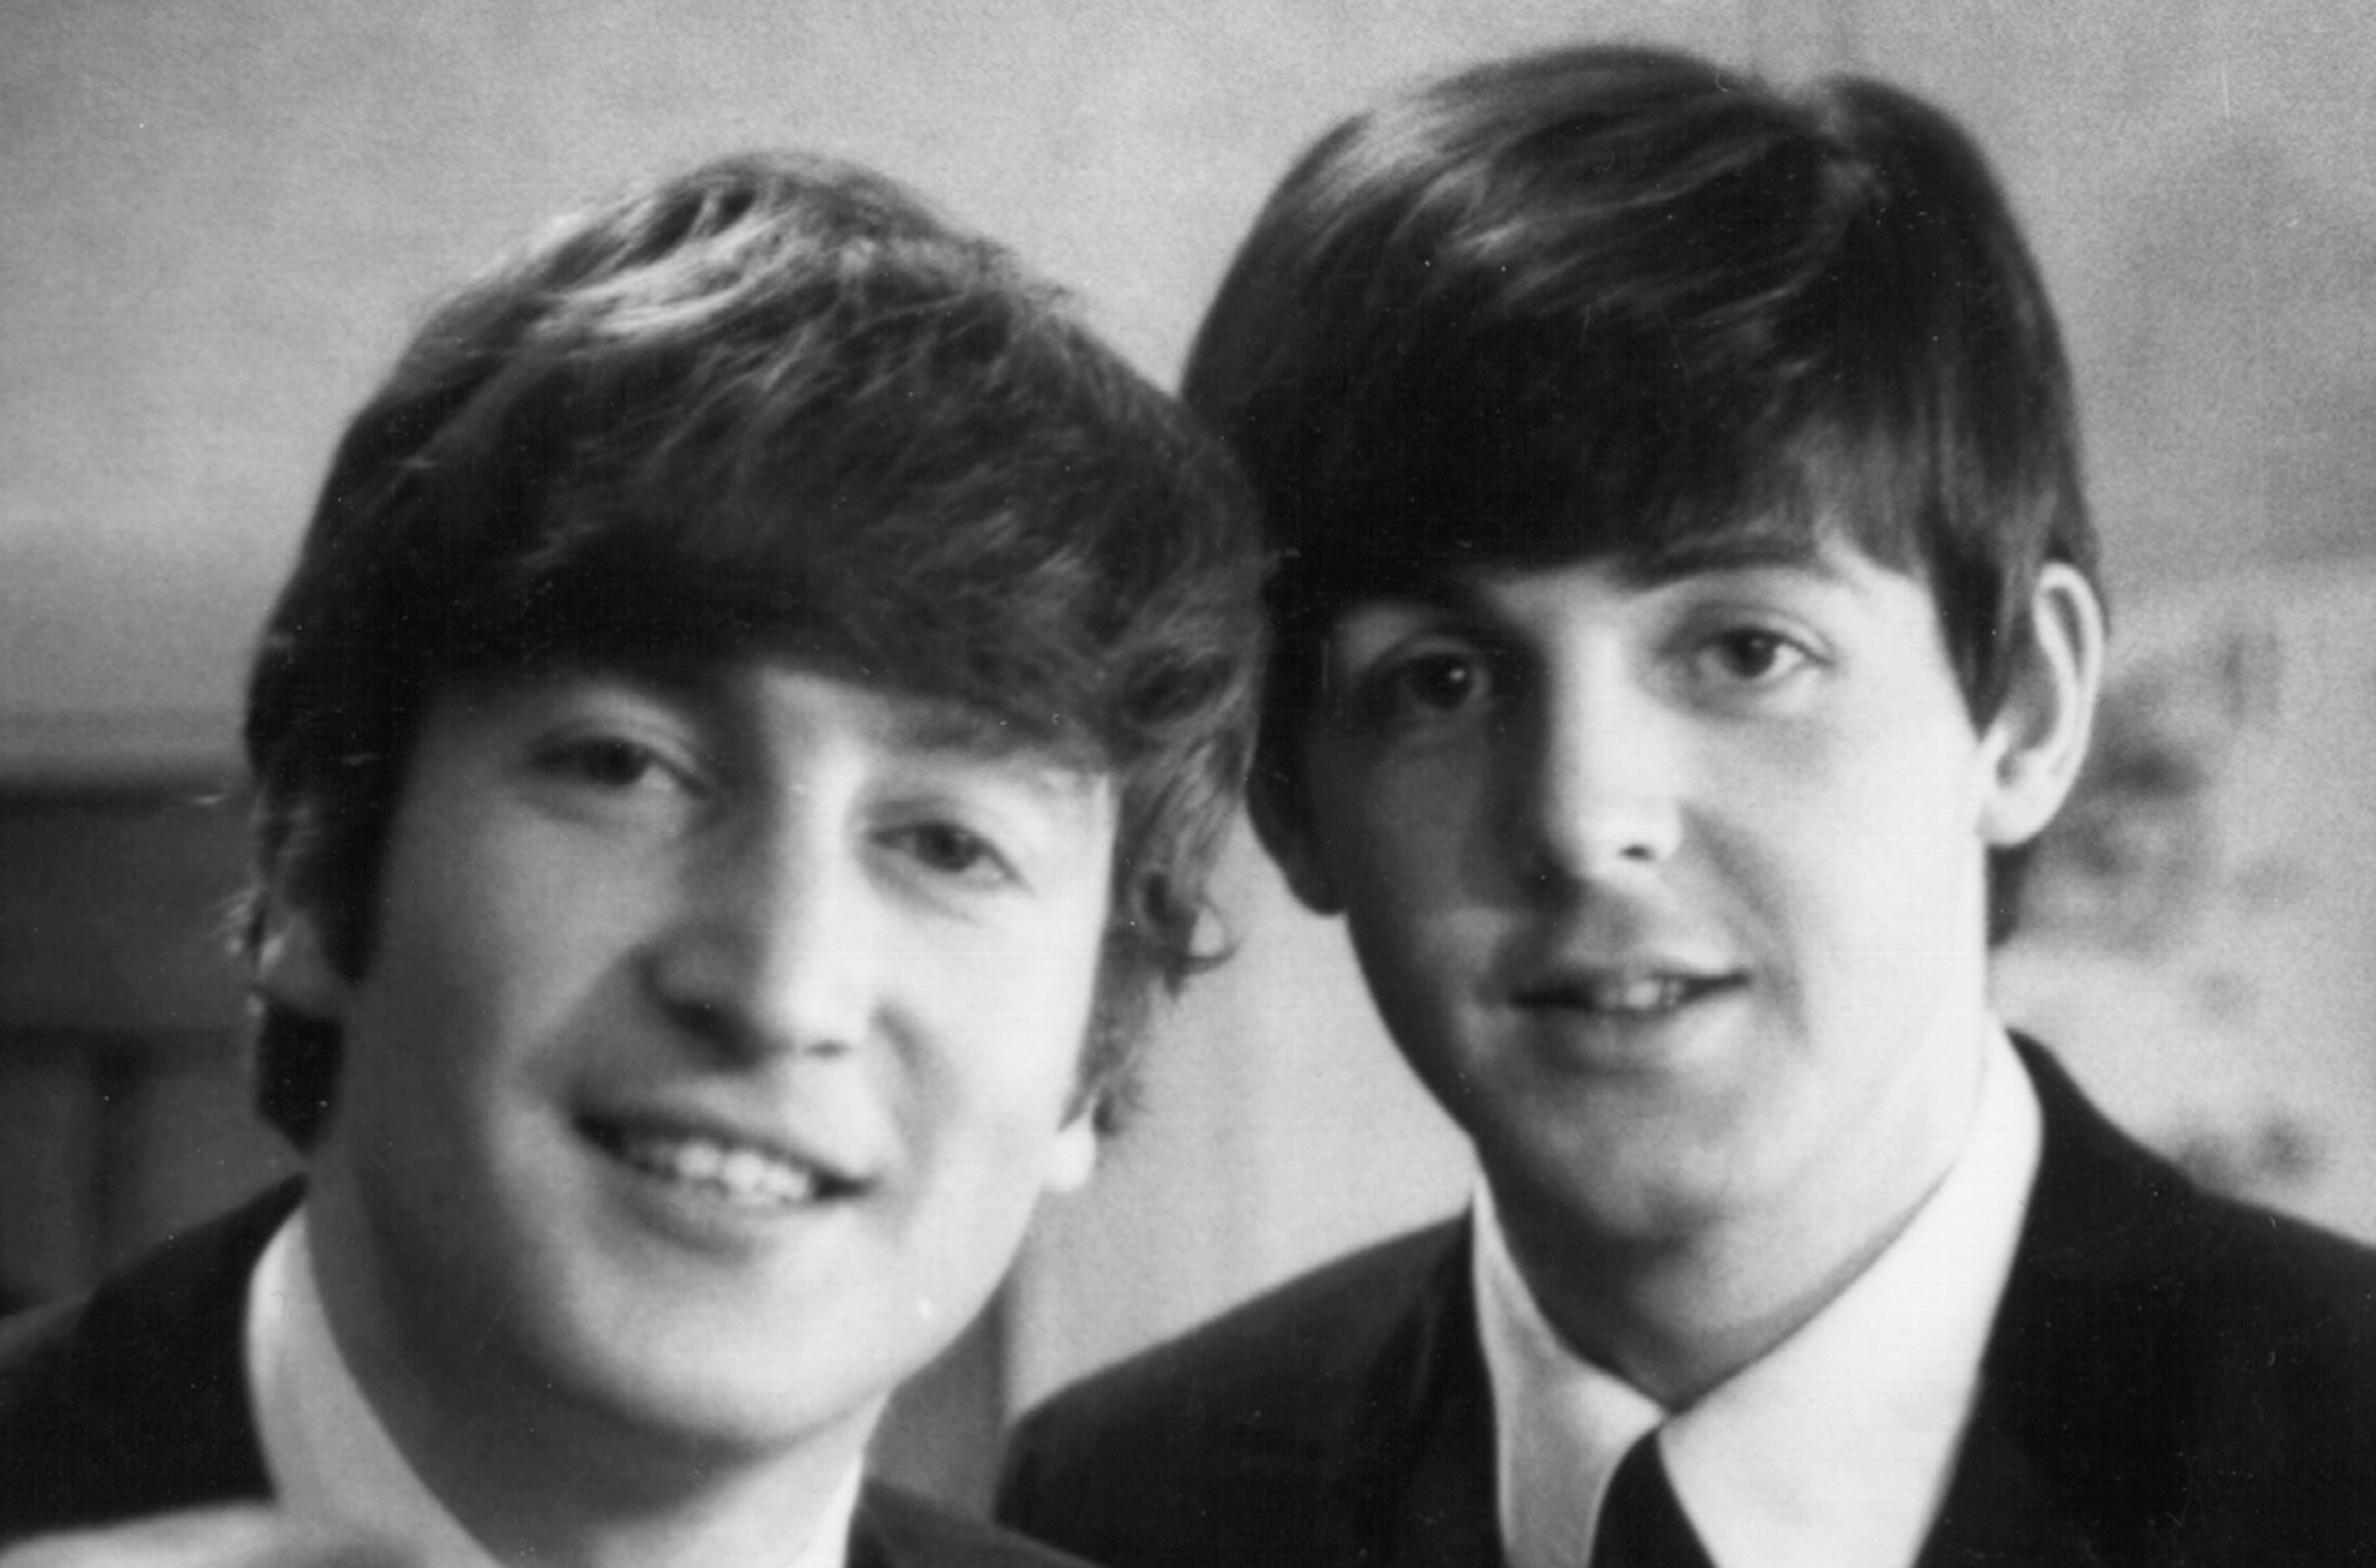 Paul McCartney and John Lennon in suits